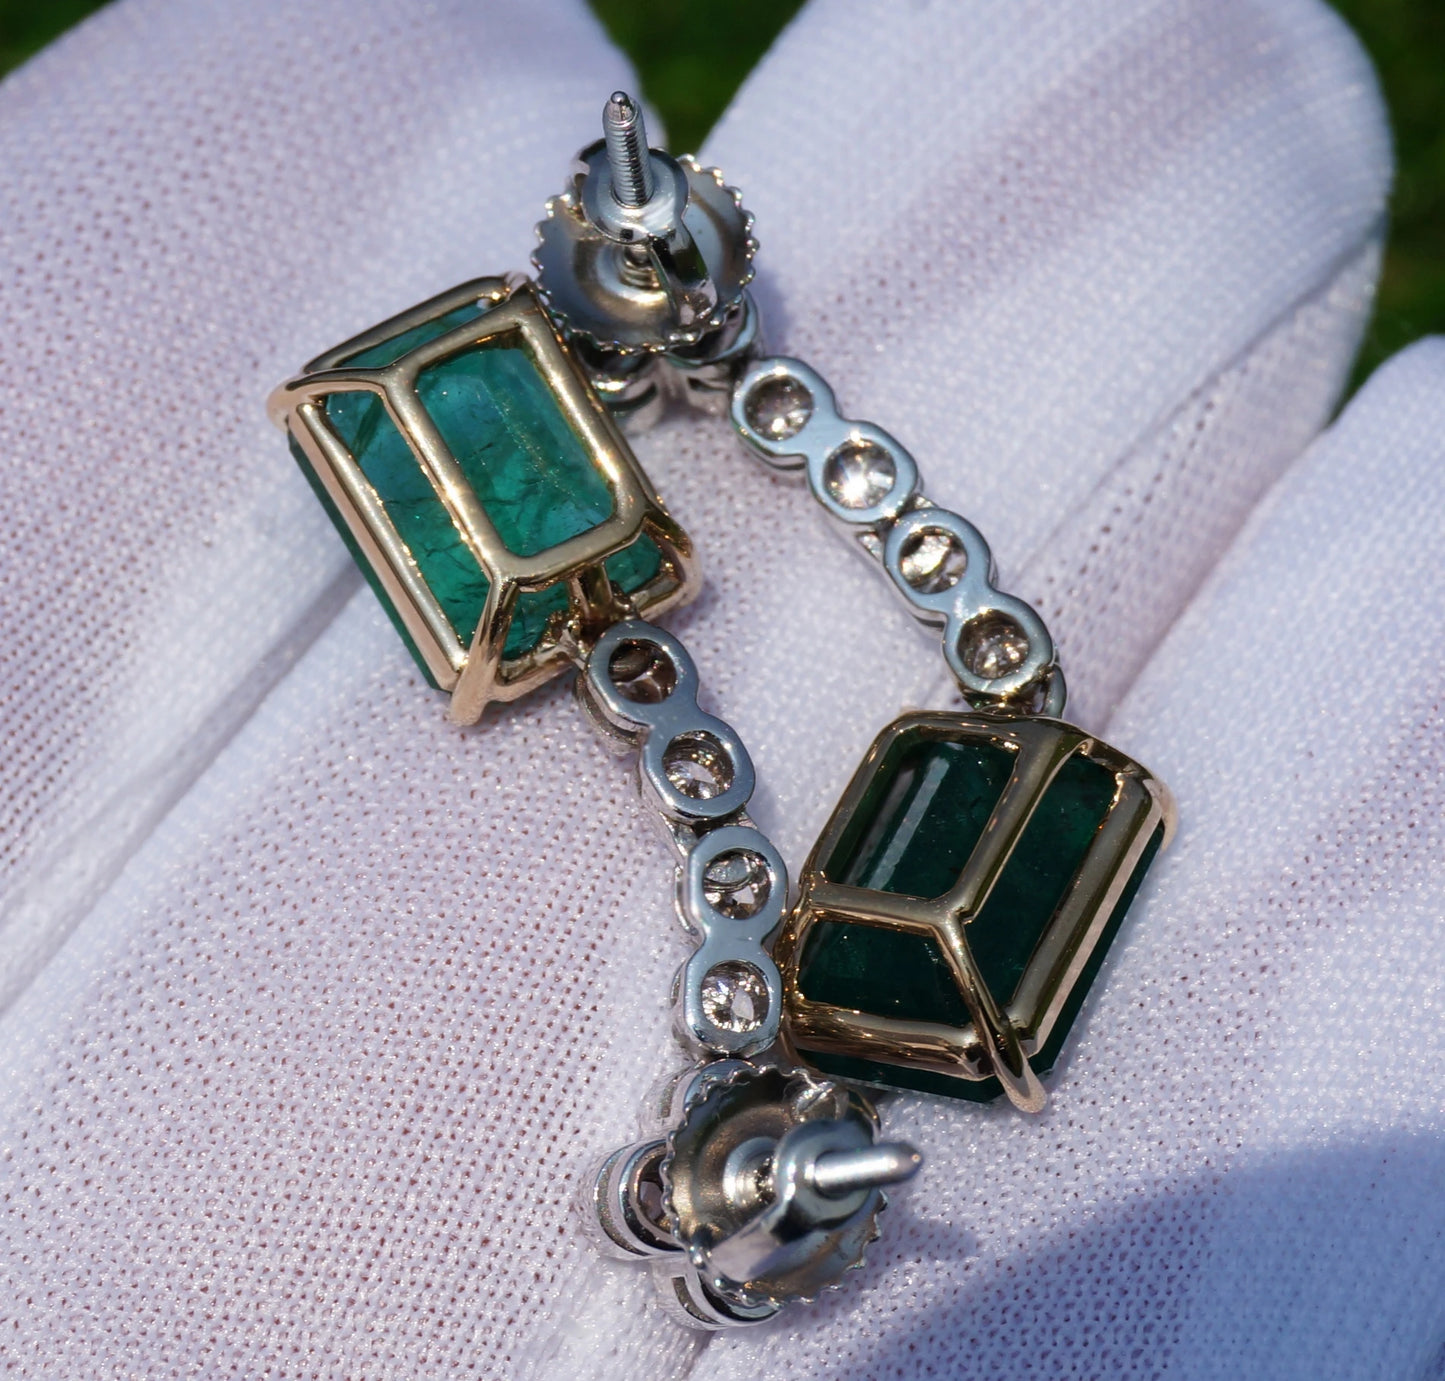 Emerald & diamond earrings gold two-toned 14k yellow/white gia certified 8.03ctw